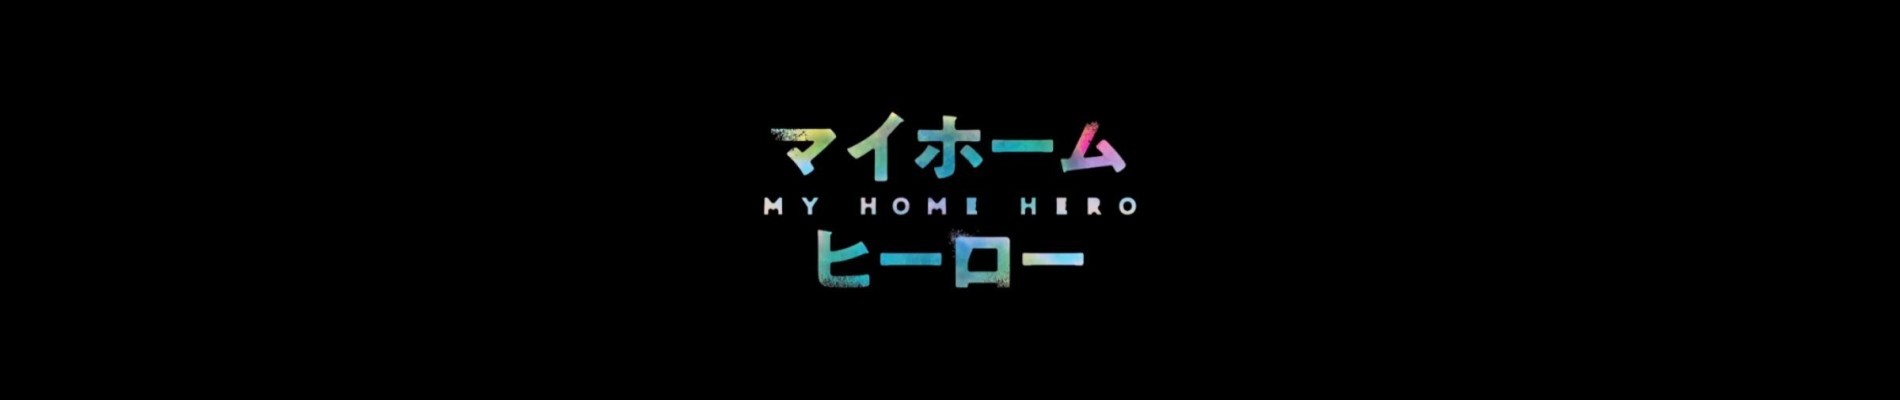 Top 10 Anime Like My Home Hero 